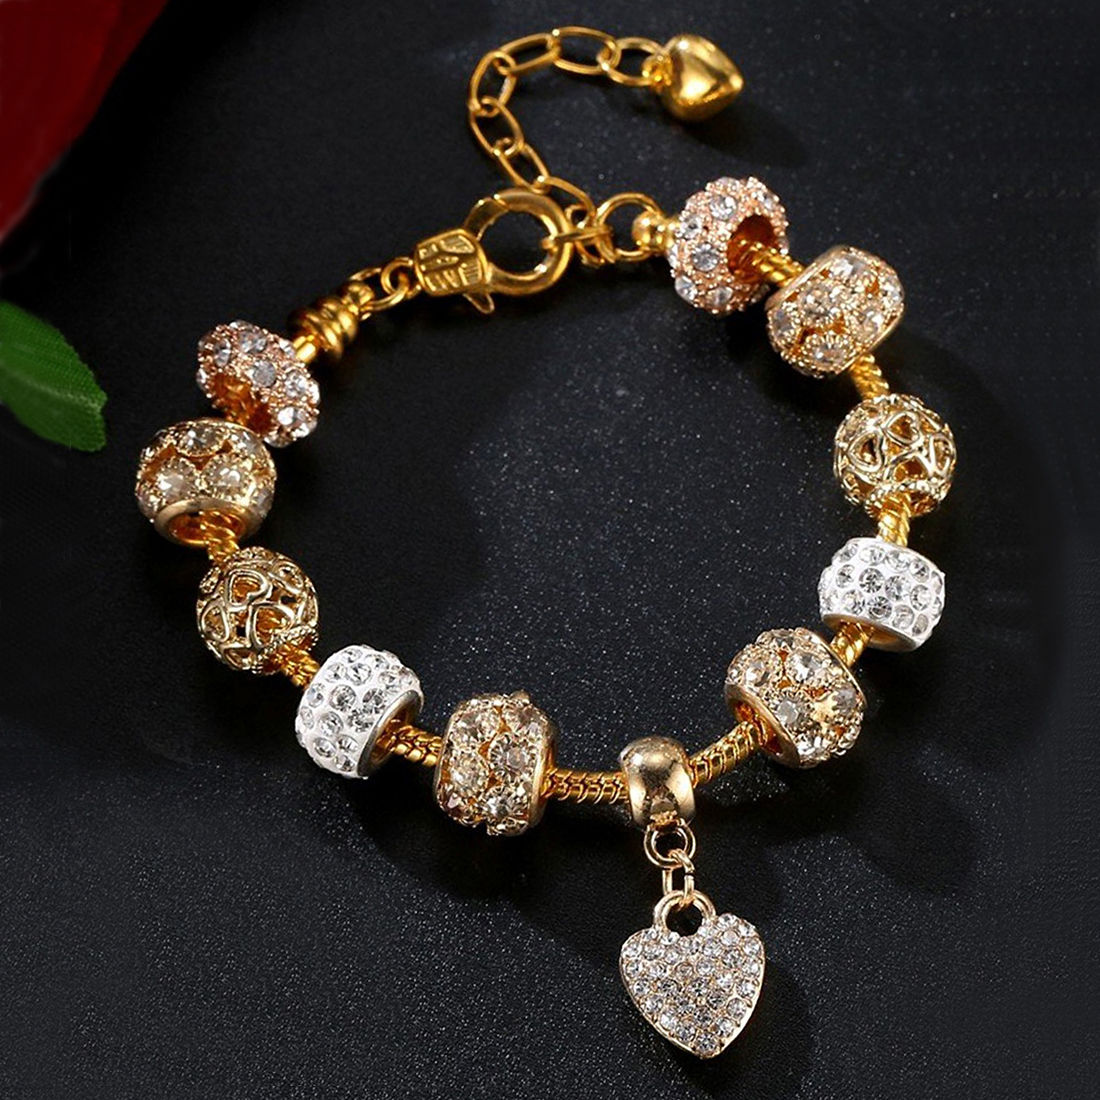 Pandora Gold Bracelet & beads. | Pandora bracelet gold, Pandora jewelry  charms, Pandora bracelet charms ideas